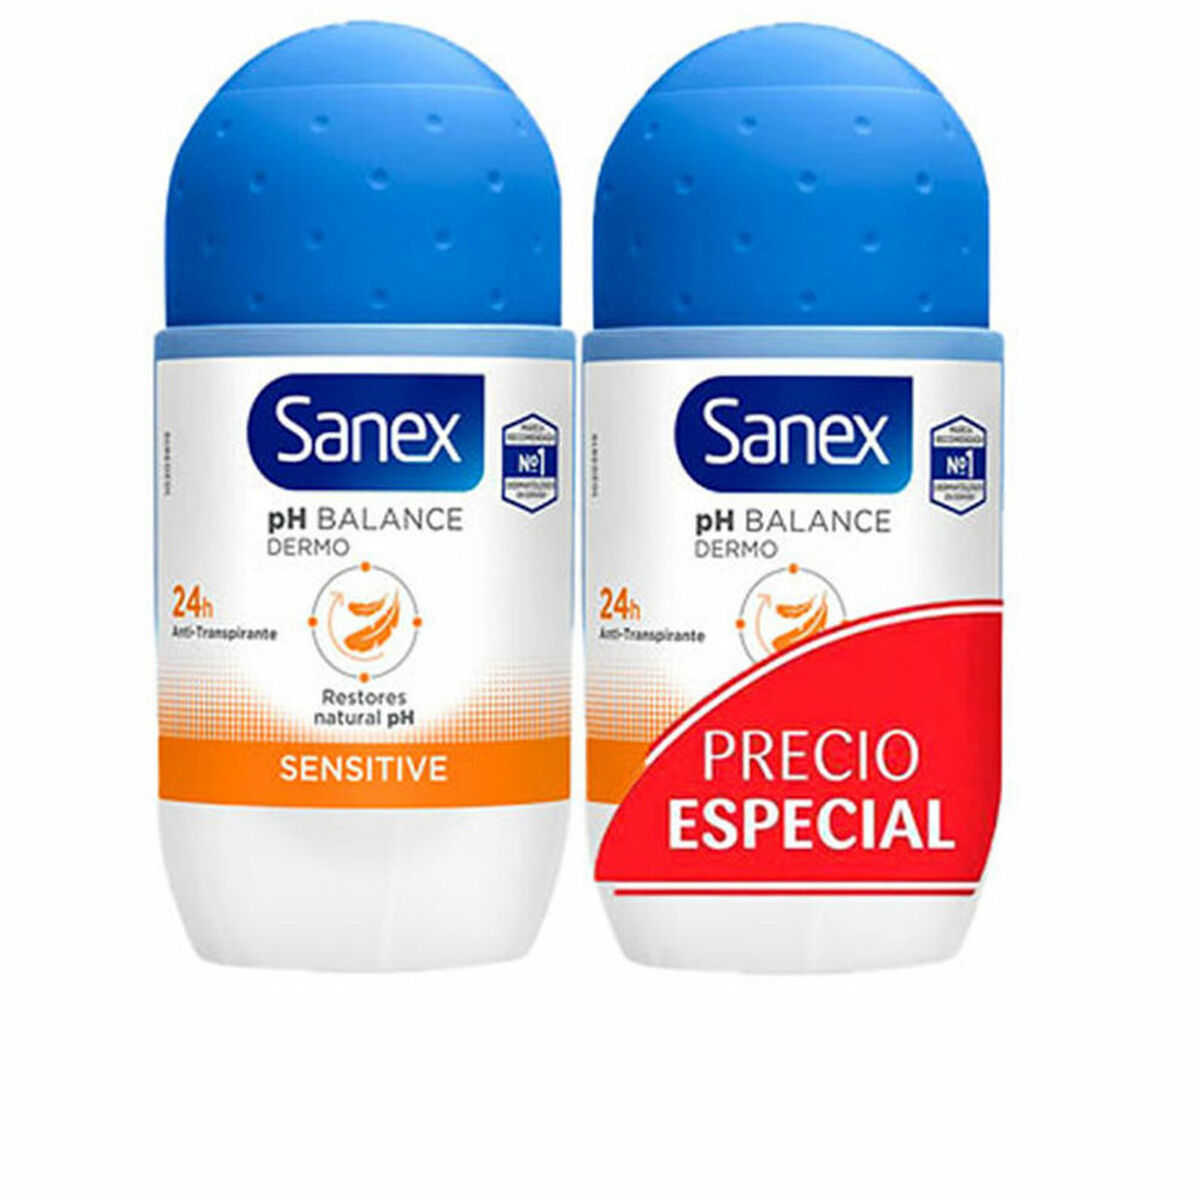 Roll-on deodorant Sanex sensitiv 2 x 50 ml